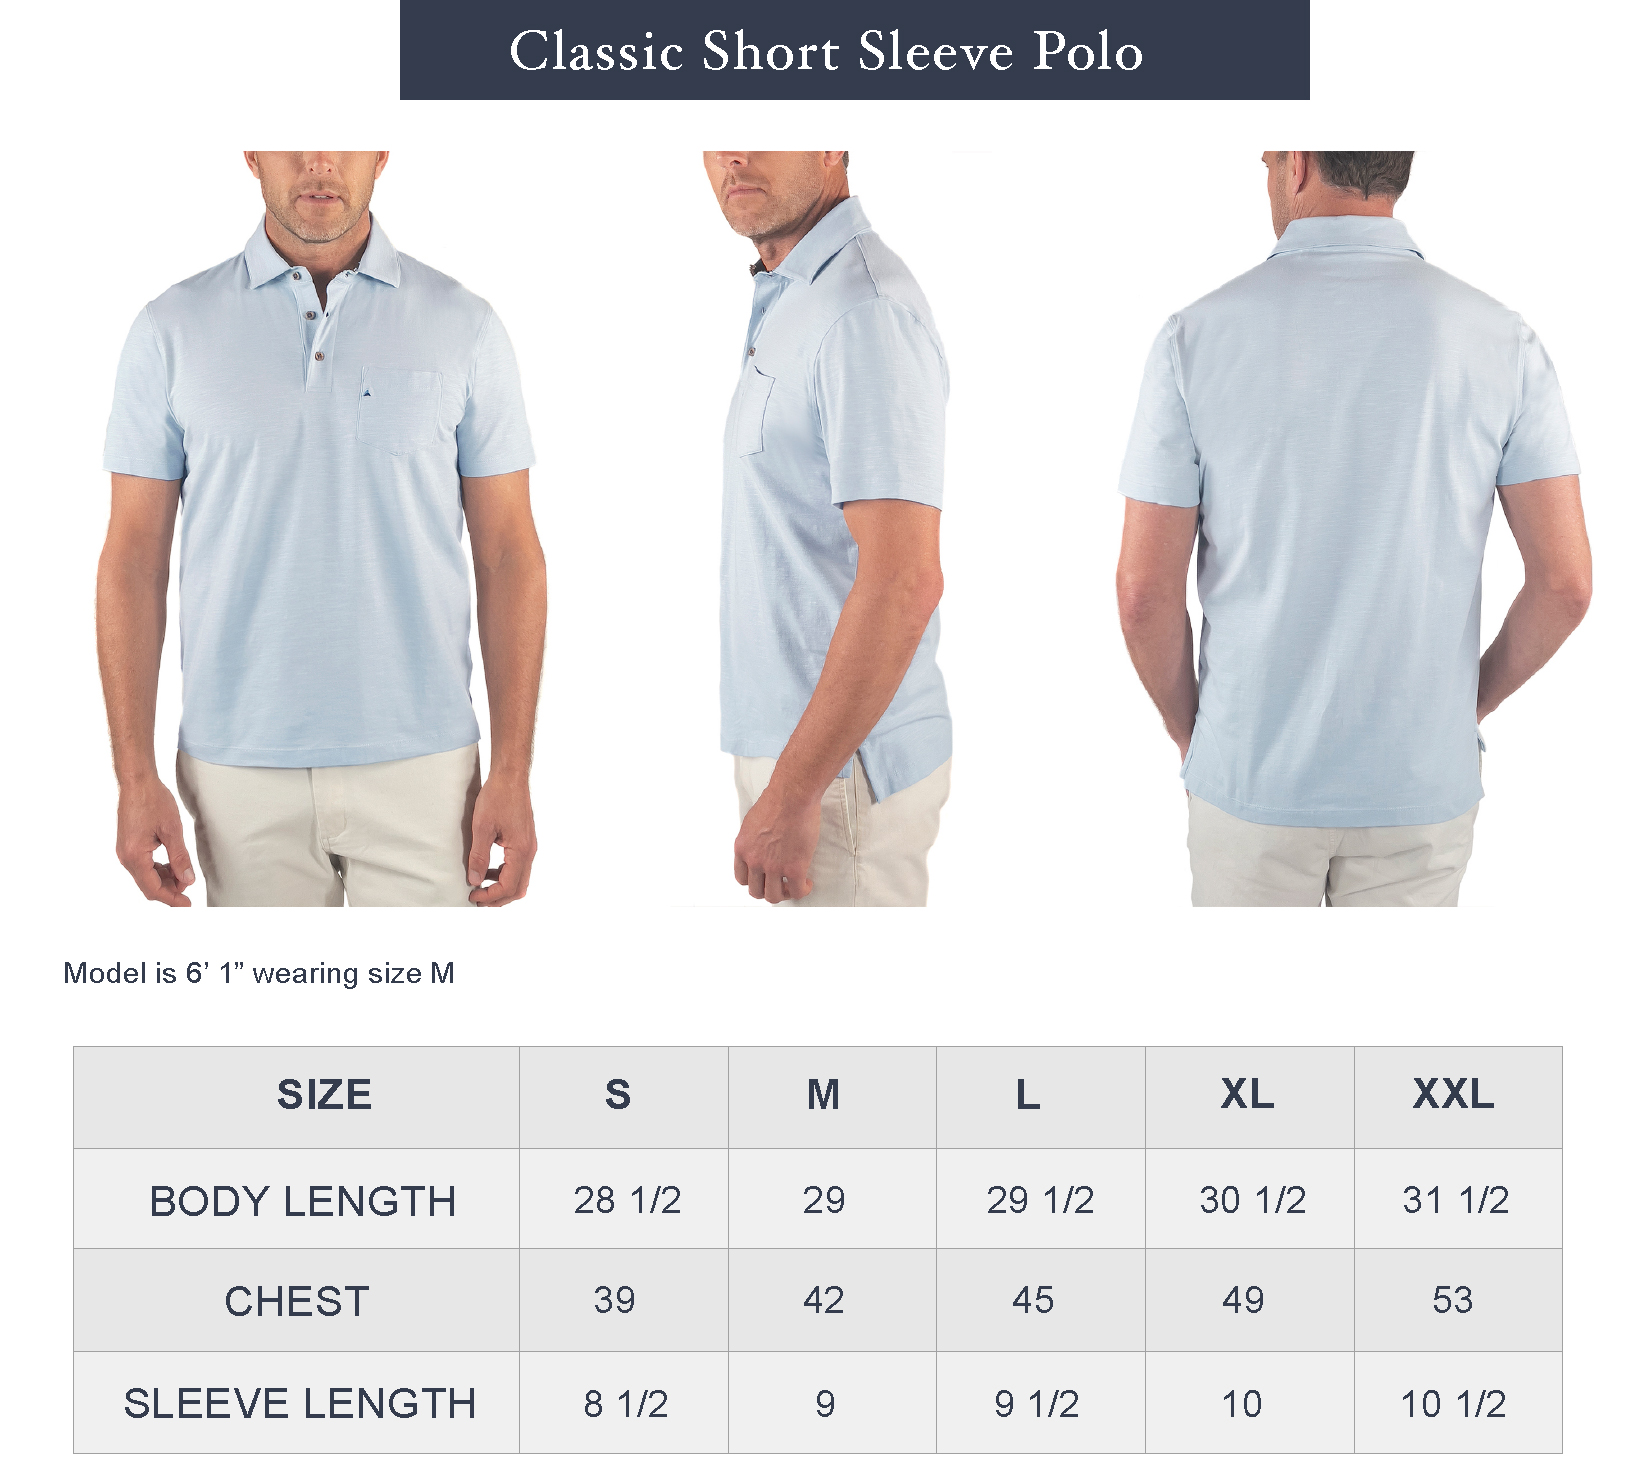 Buy GANT Men's Classic Short-Sleeve Piqué Polo, Light Yellow